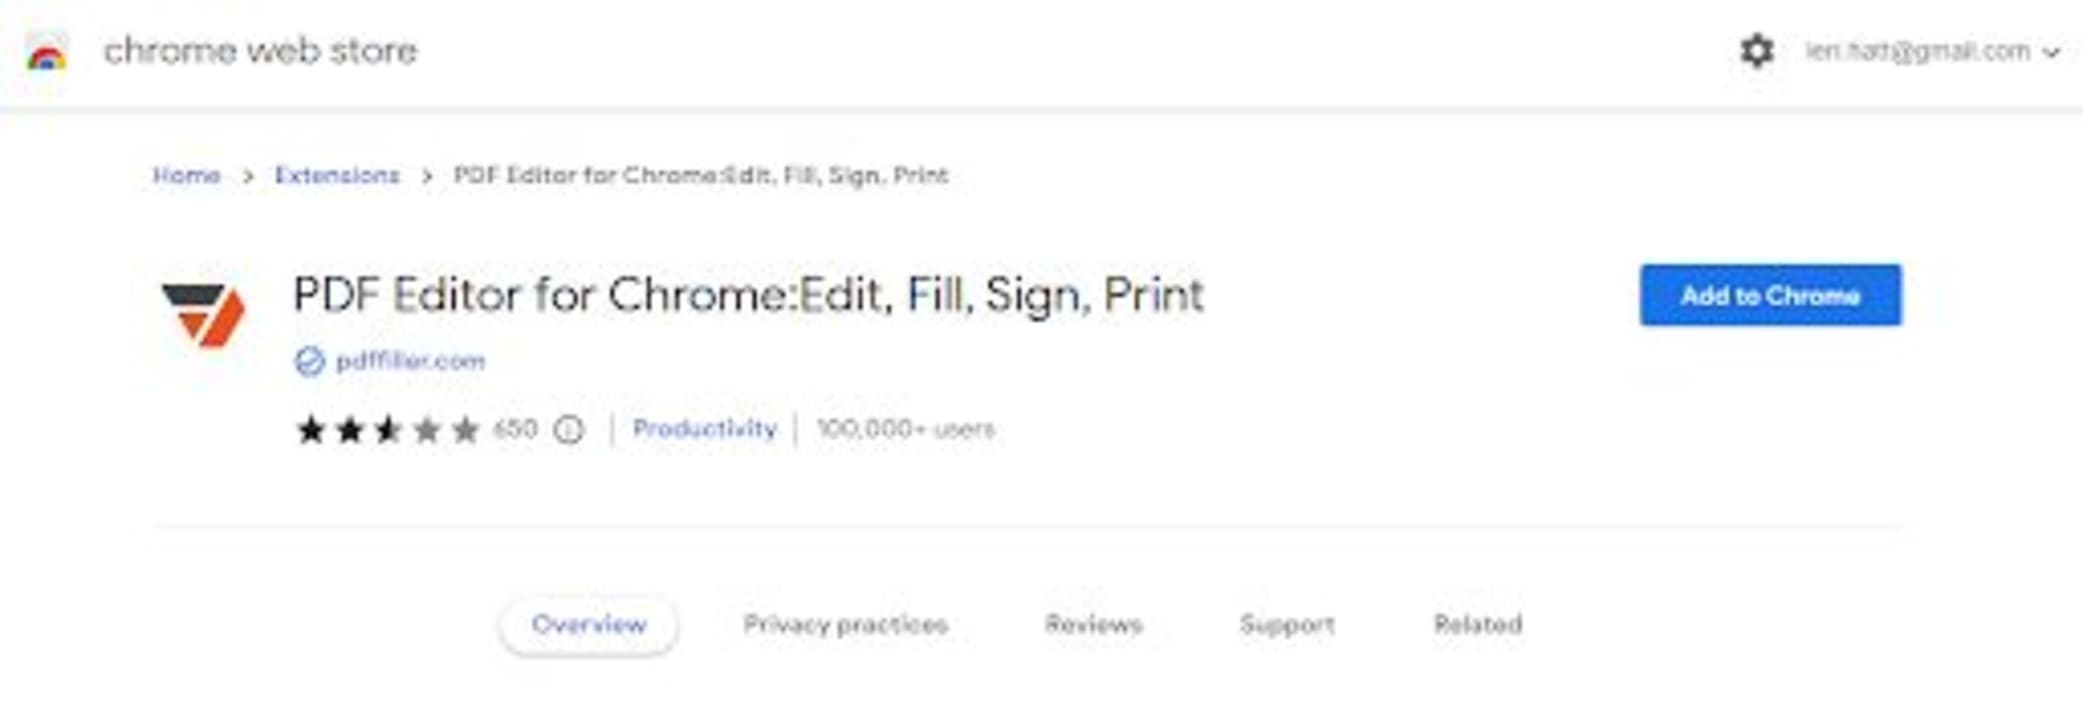 PDF Editor for Chrome Edit, Fill, Sign, Print